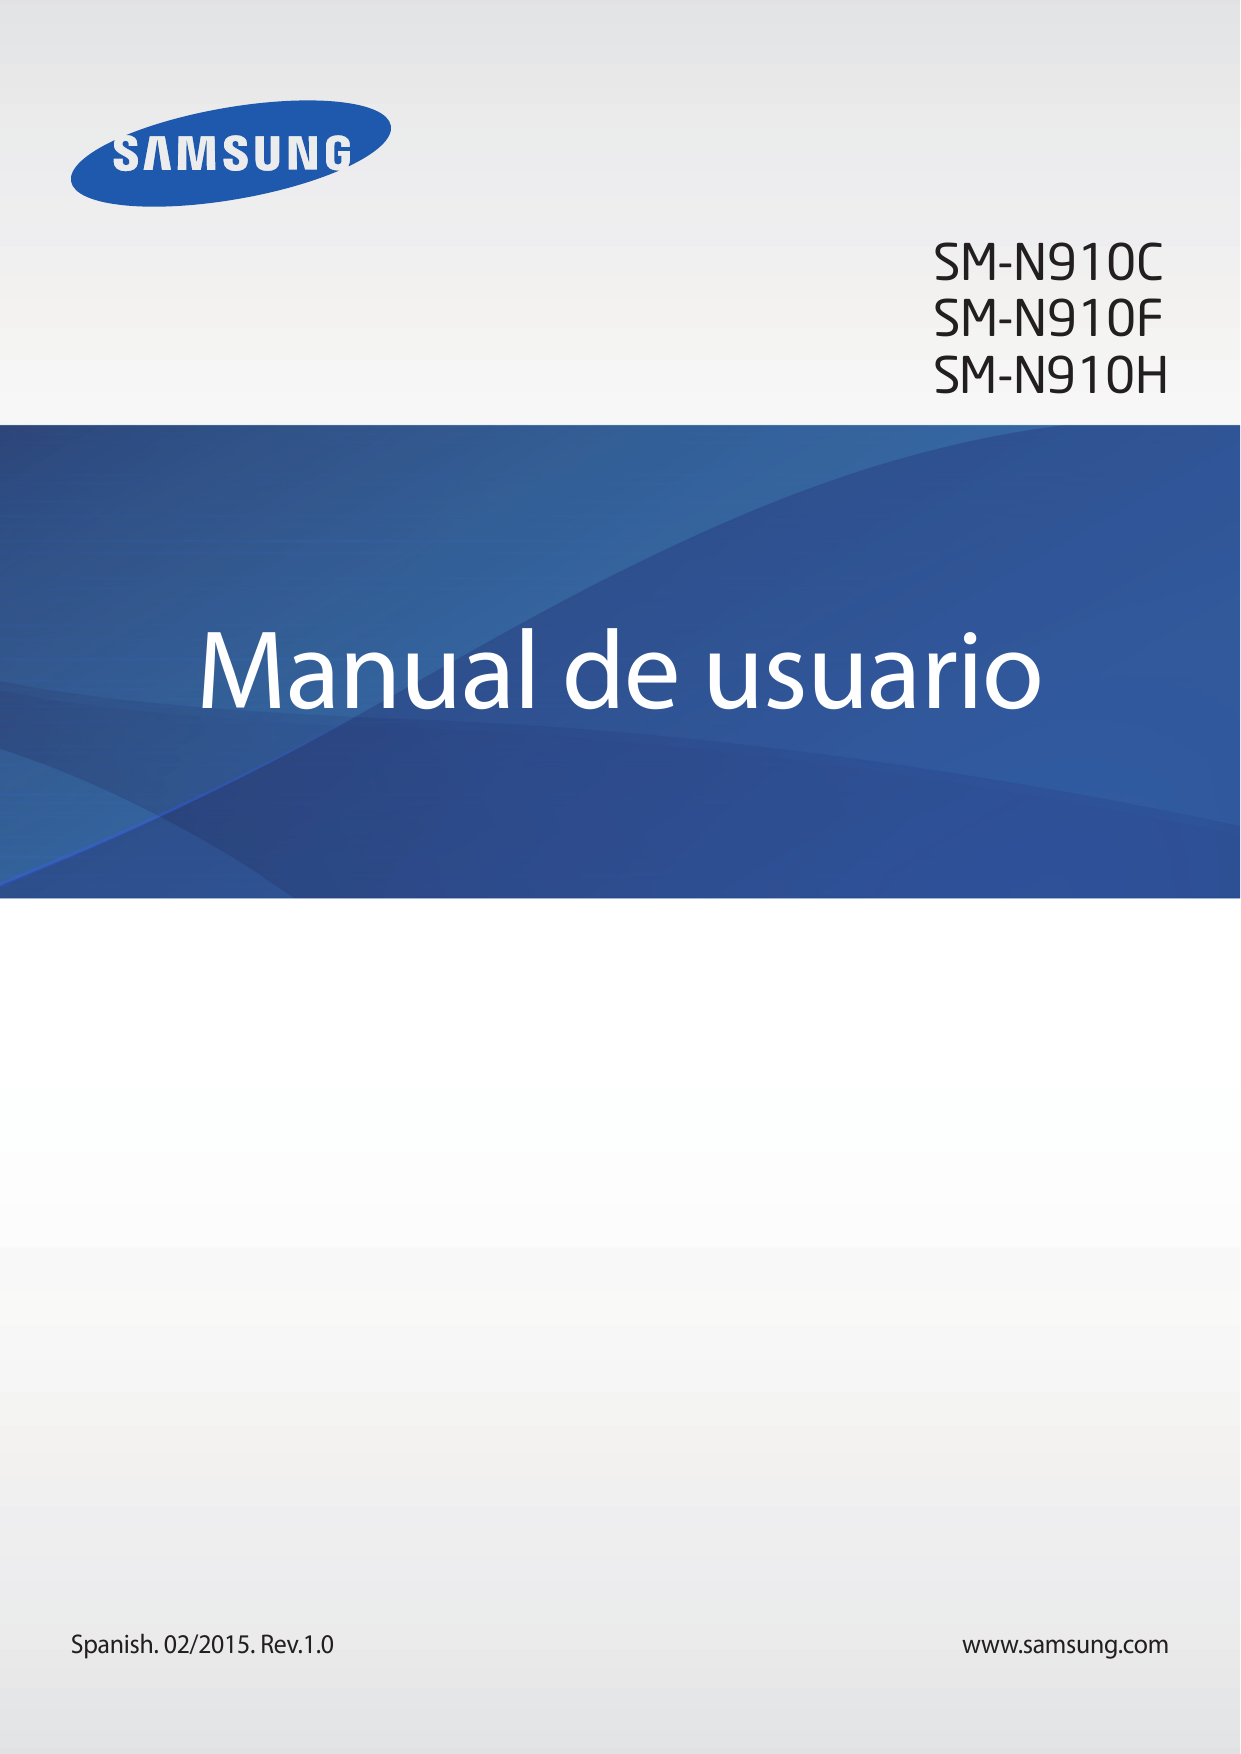 SM-N910CSM-N910FSM-N910HManual de usuarioSpanish. 02/2015. Rev.1.0www.samsung.com